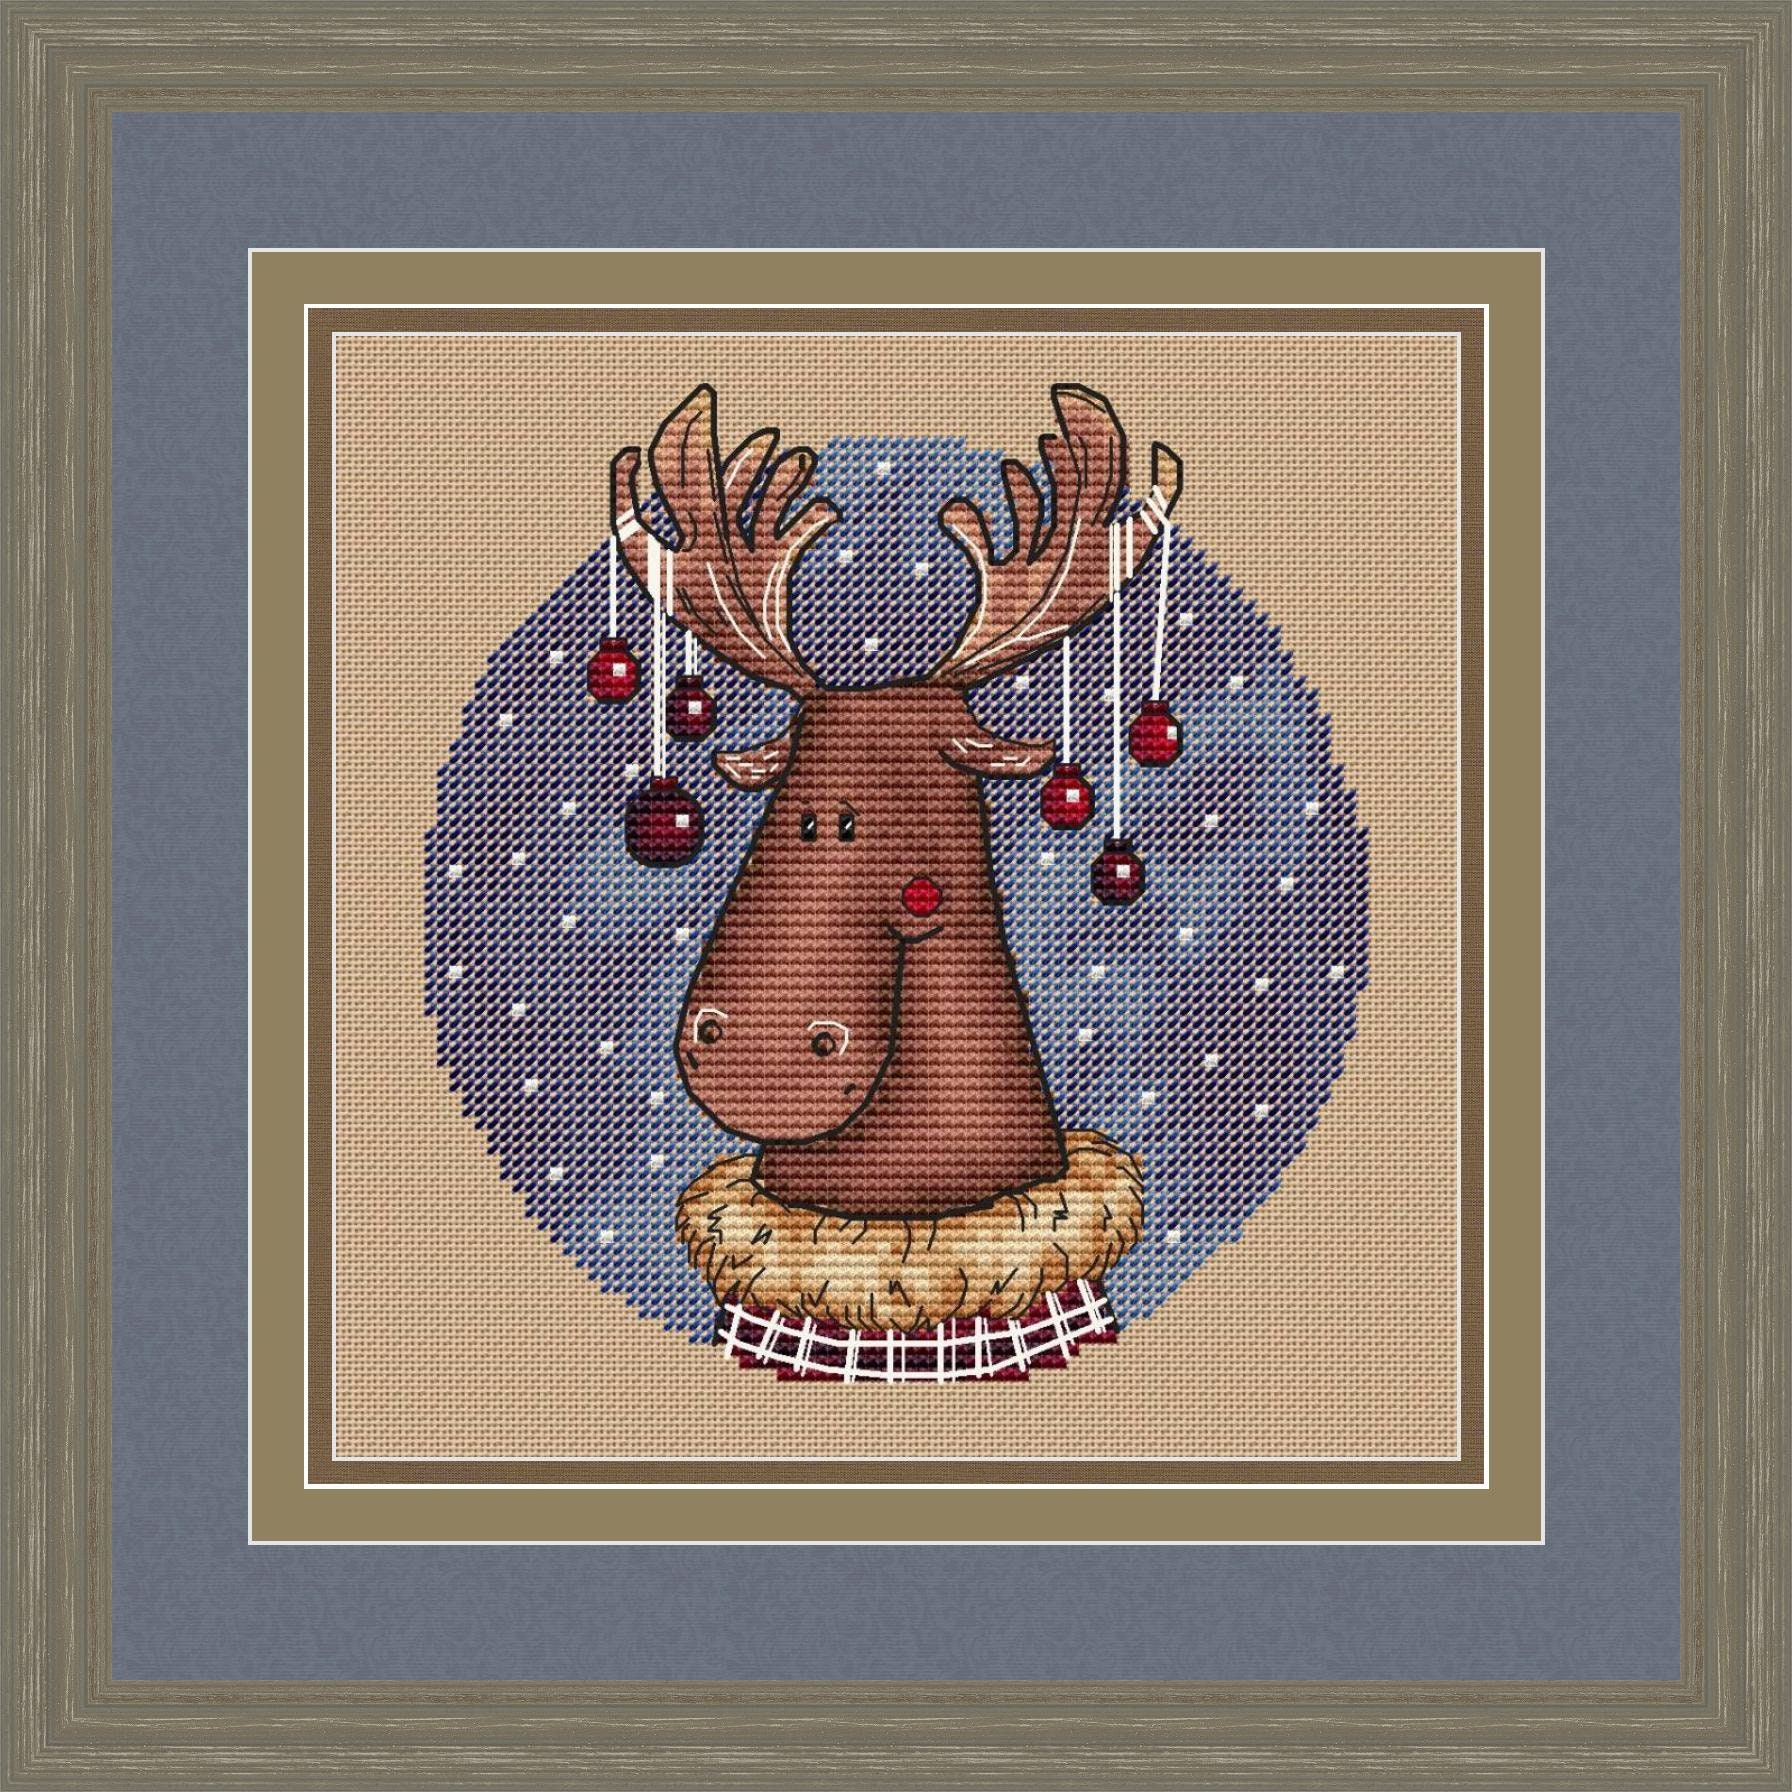 Cute Moose Christmas Stocking Girl Cross Stitch Pattern DIY